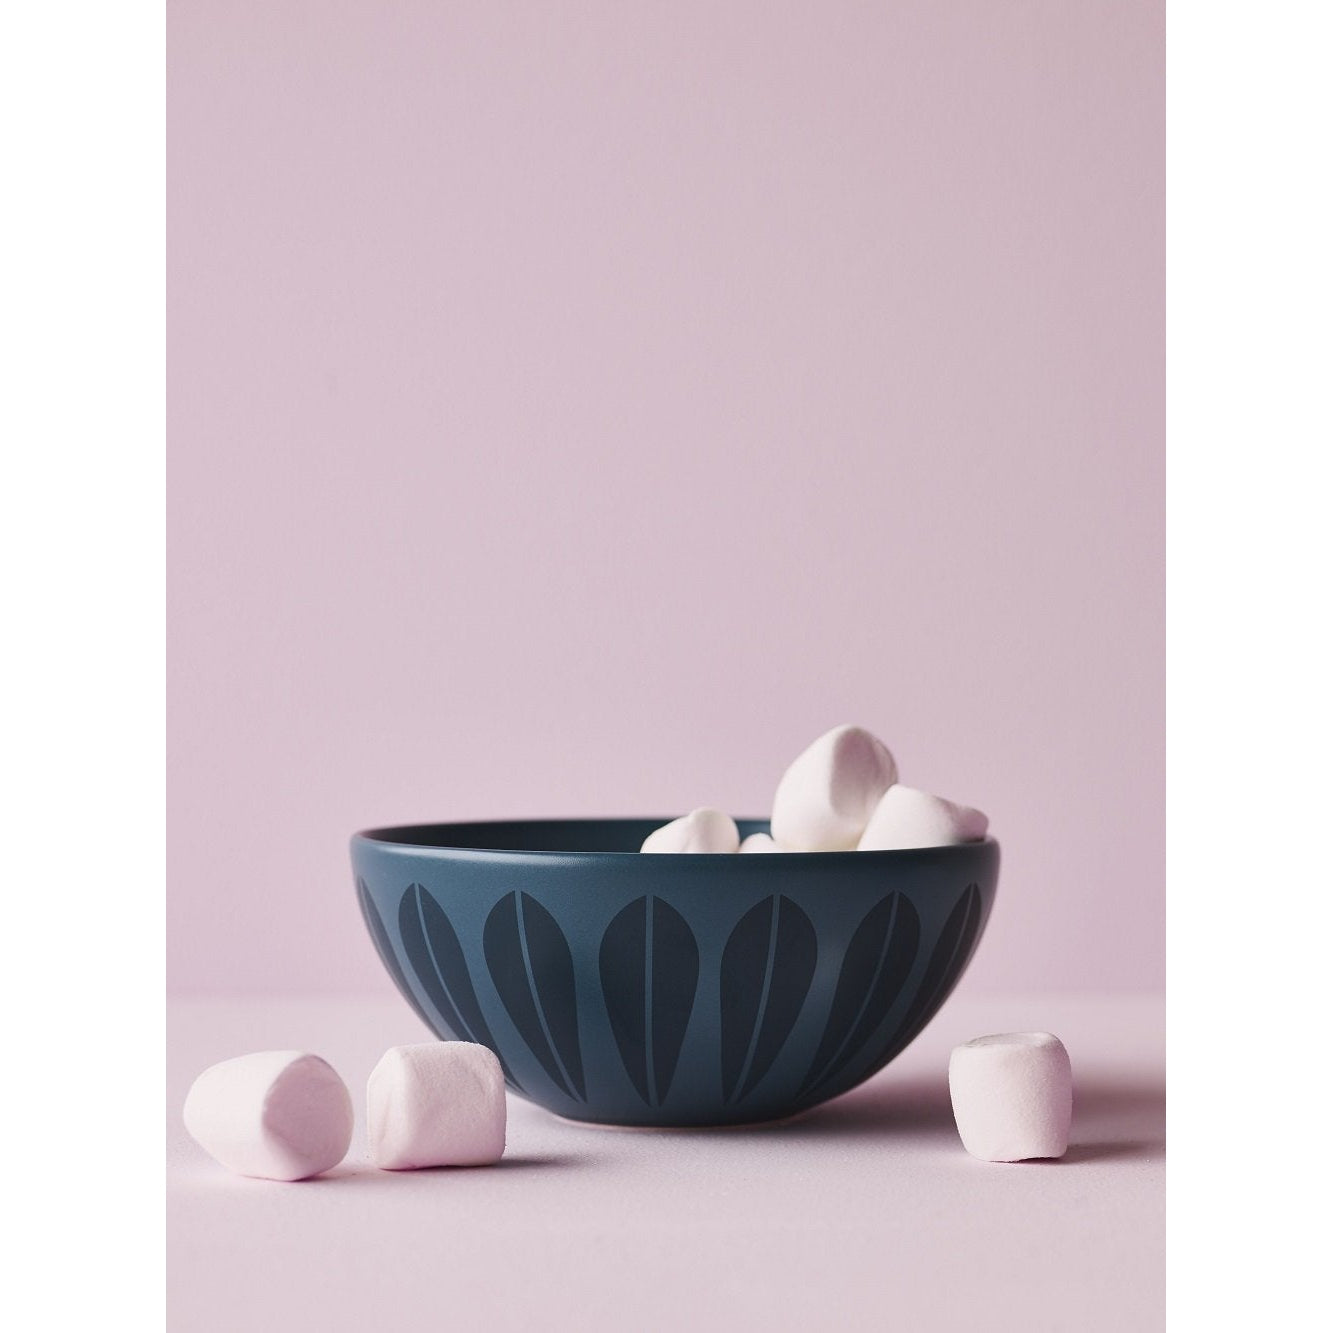 Lucie Kaas Arne Clausen Collection Sugar Bowl, grijs